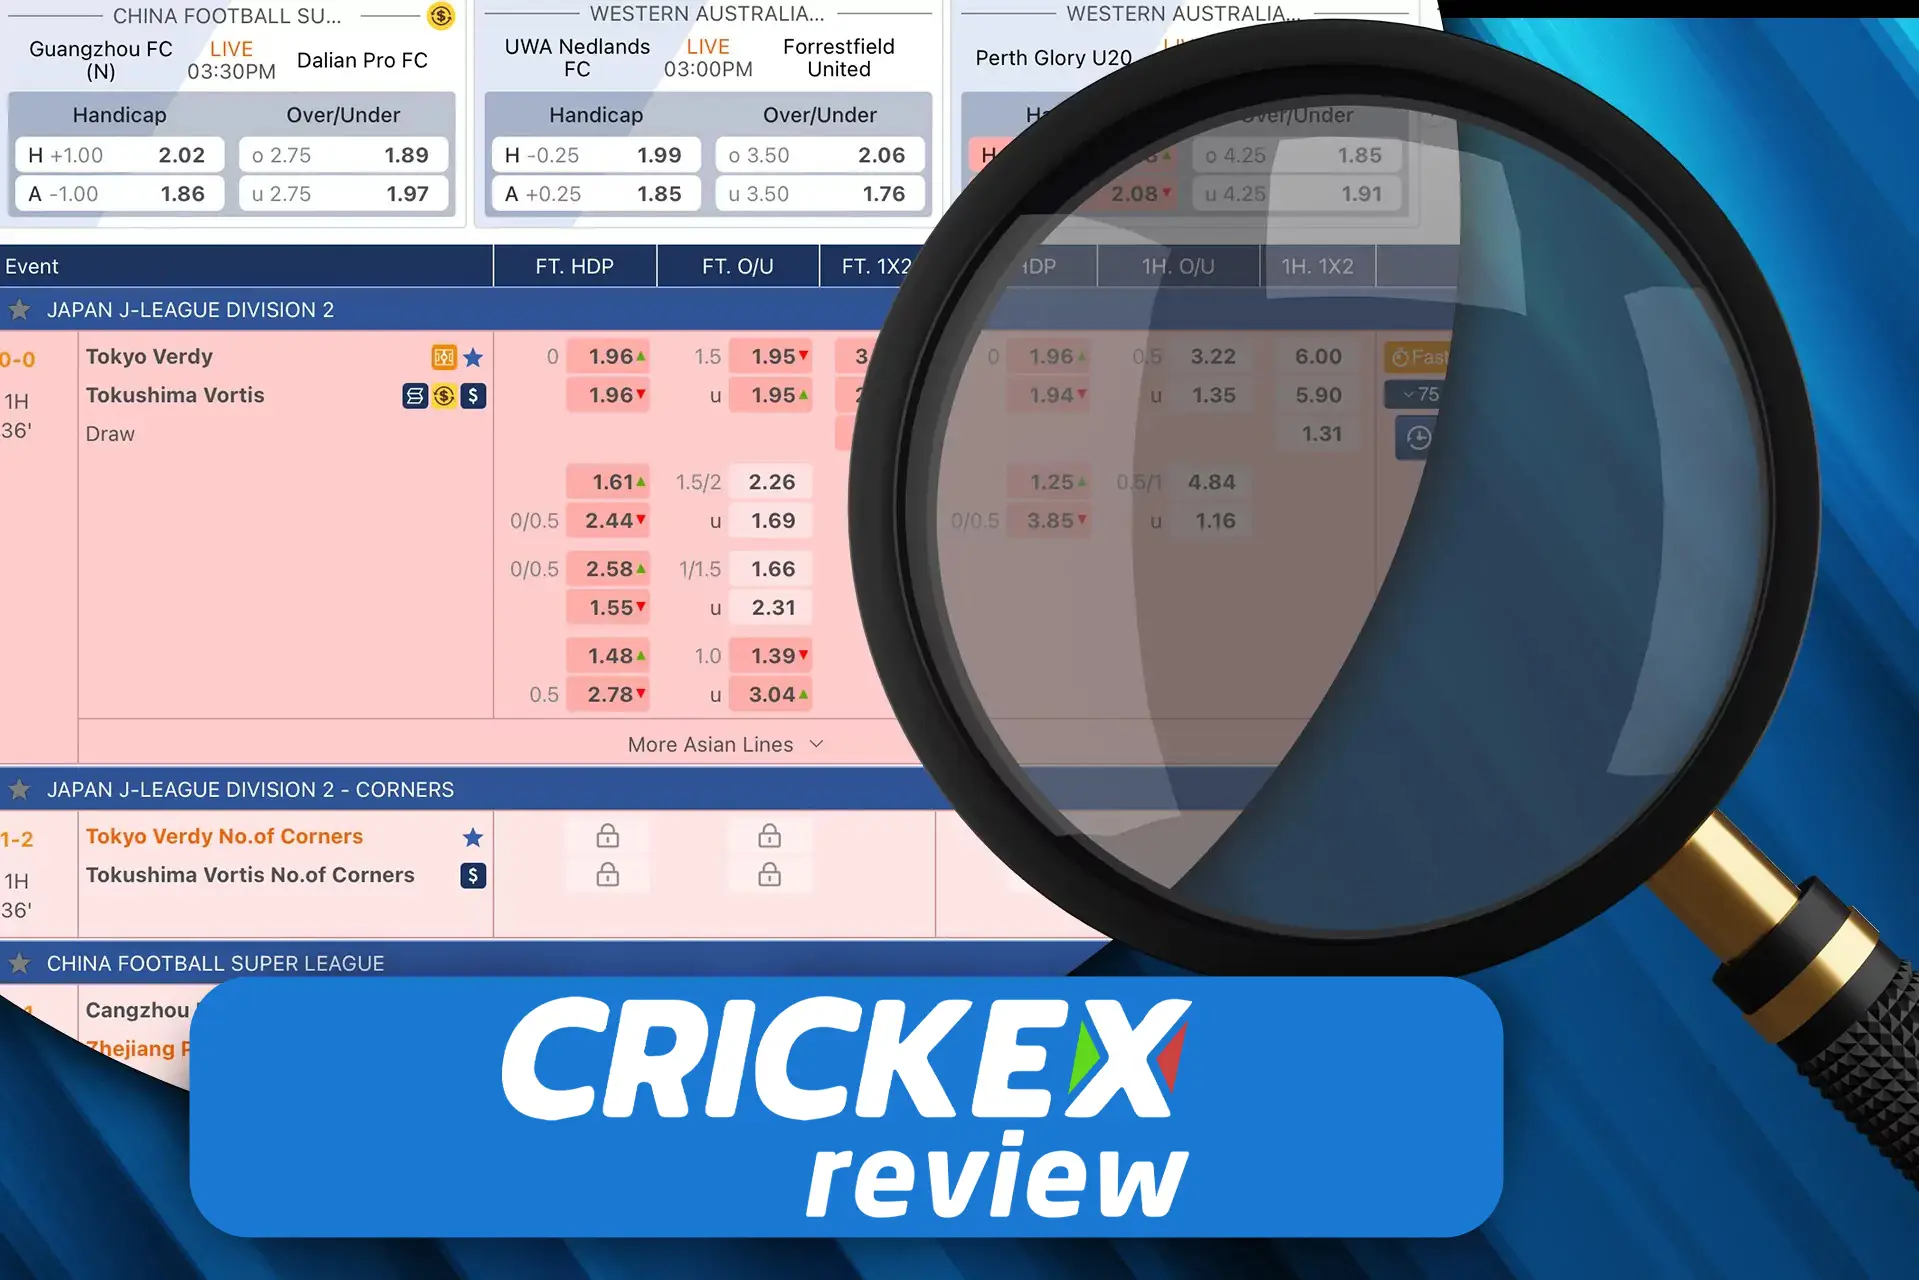 There are pretty attractive odds for betting at Crickex.